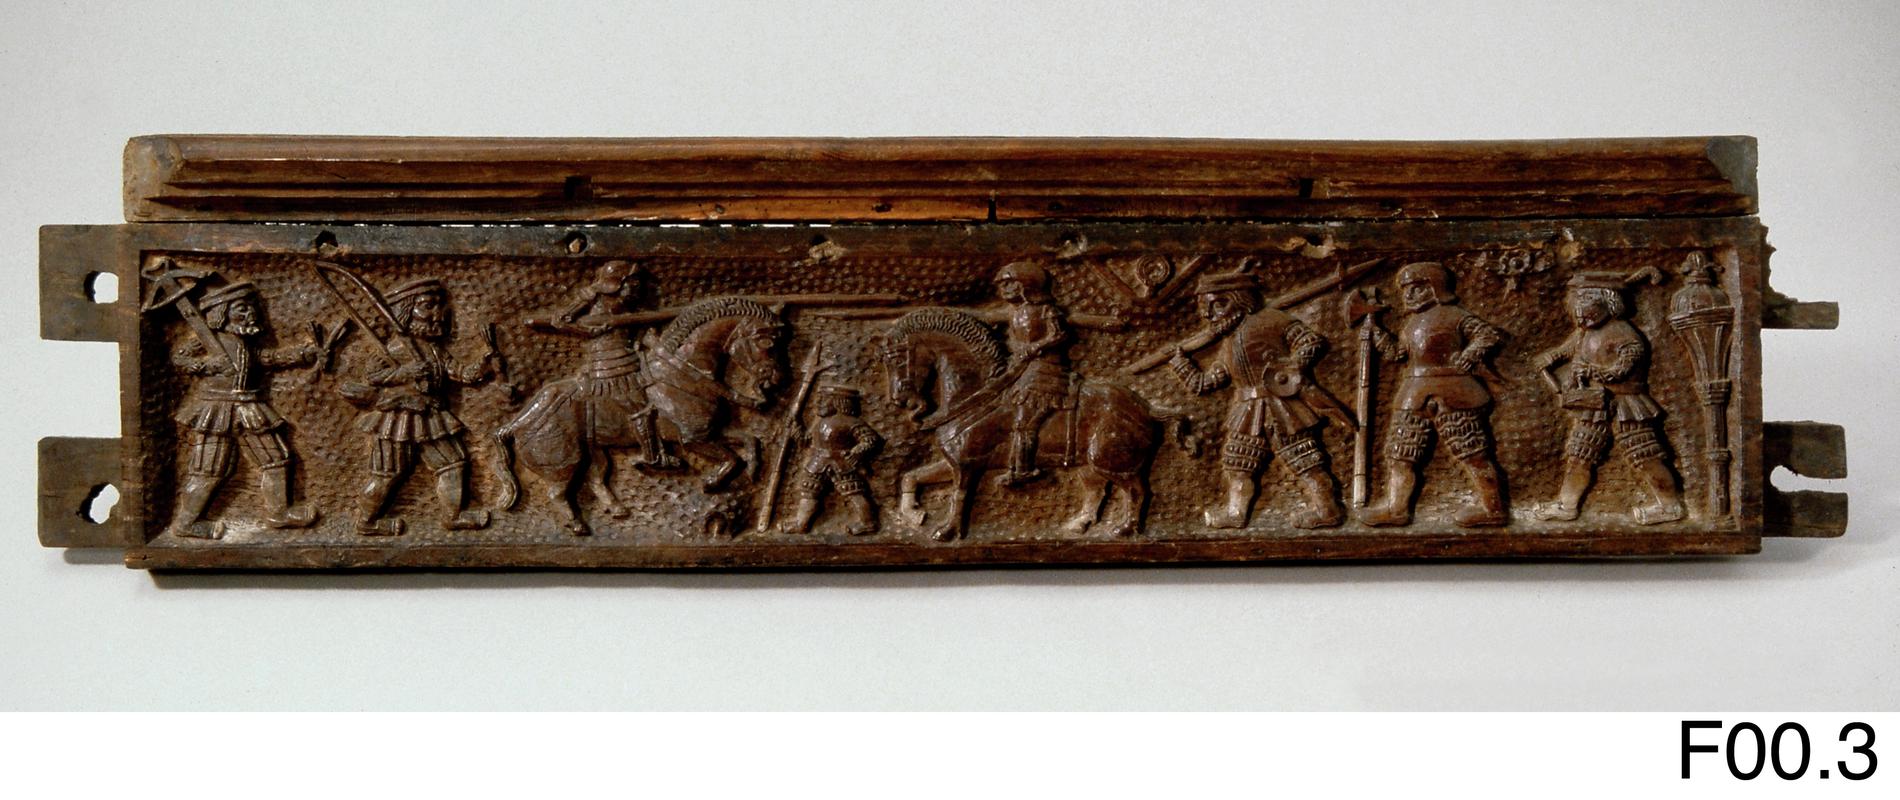 Sir Rhys ap Thomas bed - detail of carved panel